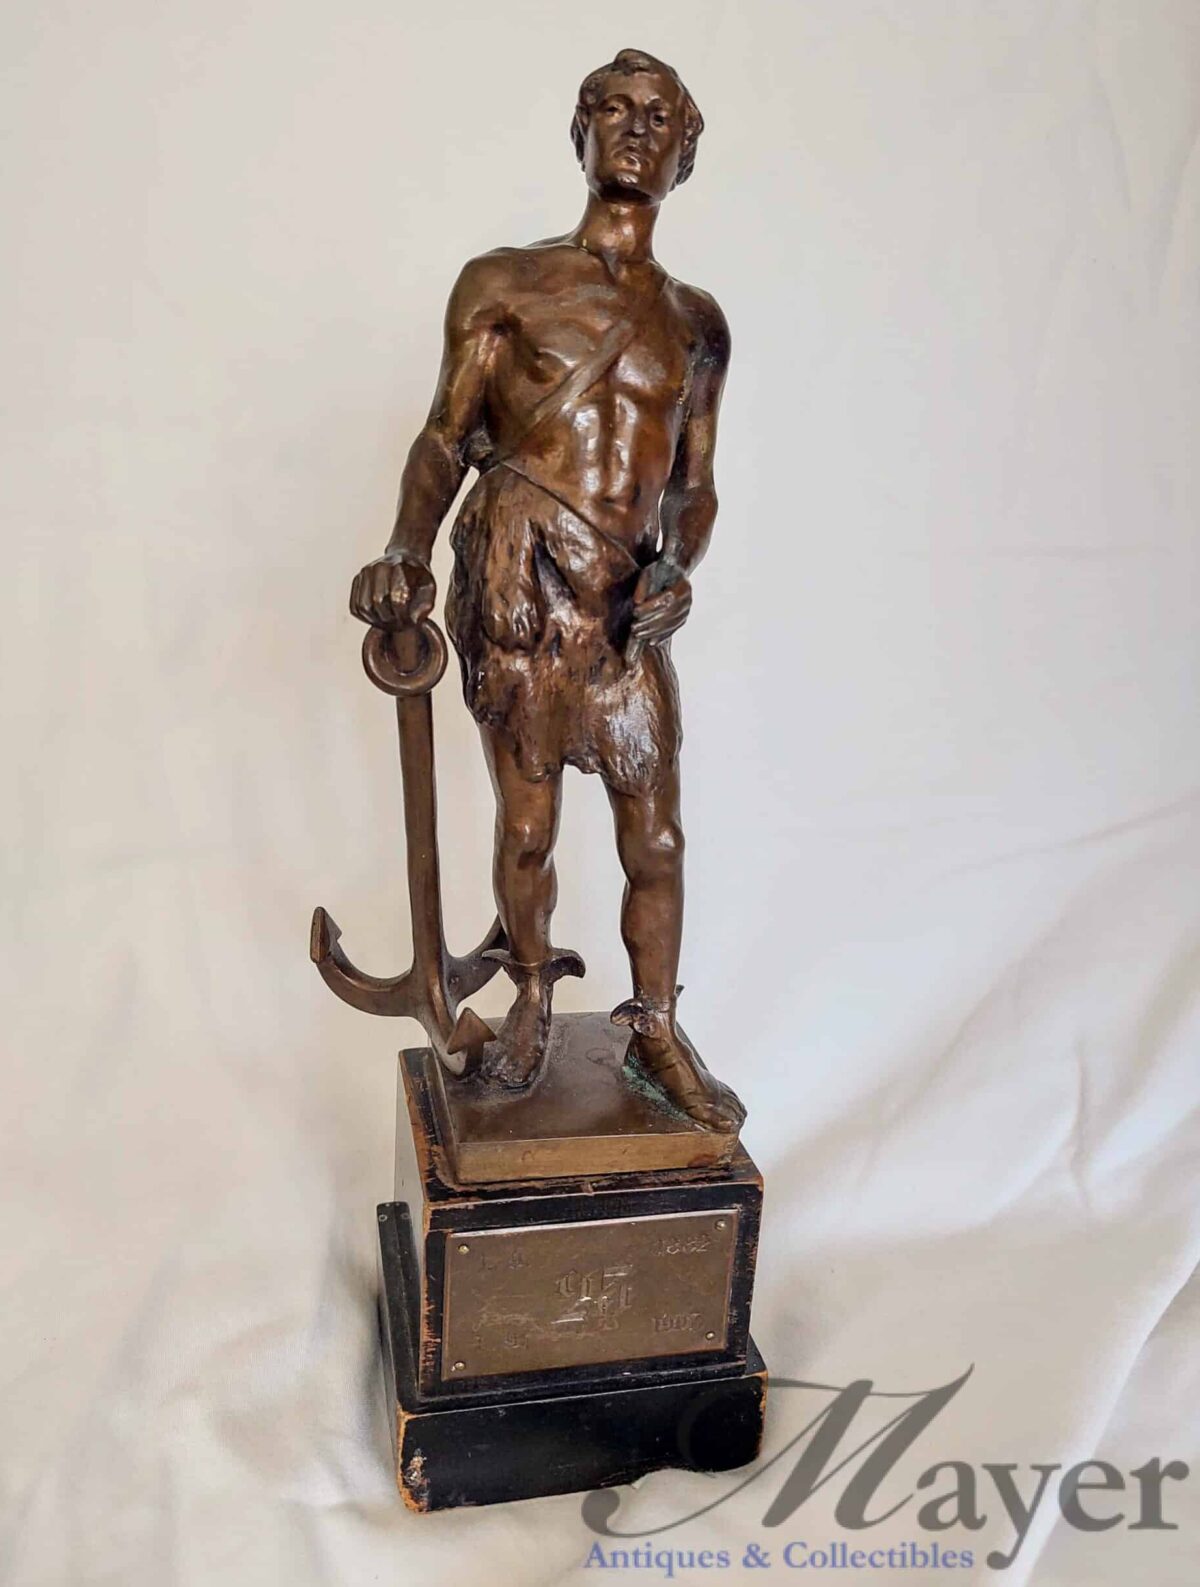 Hermes Holding an Anchor Sculpture By Hans Muller